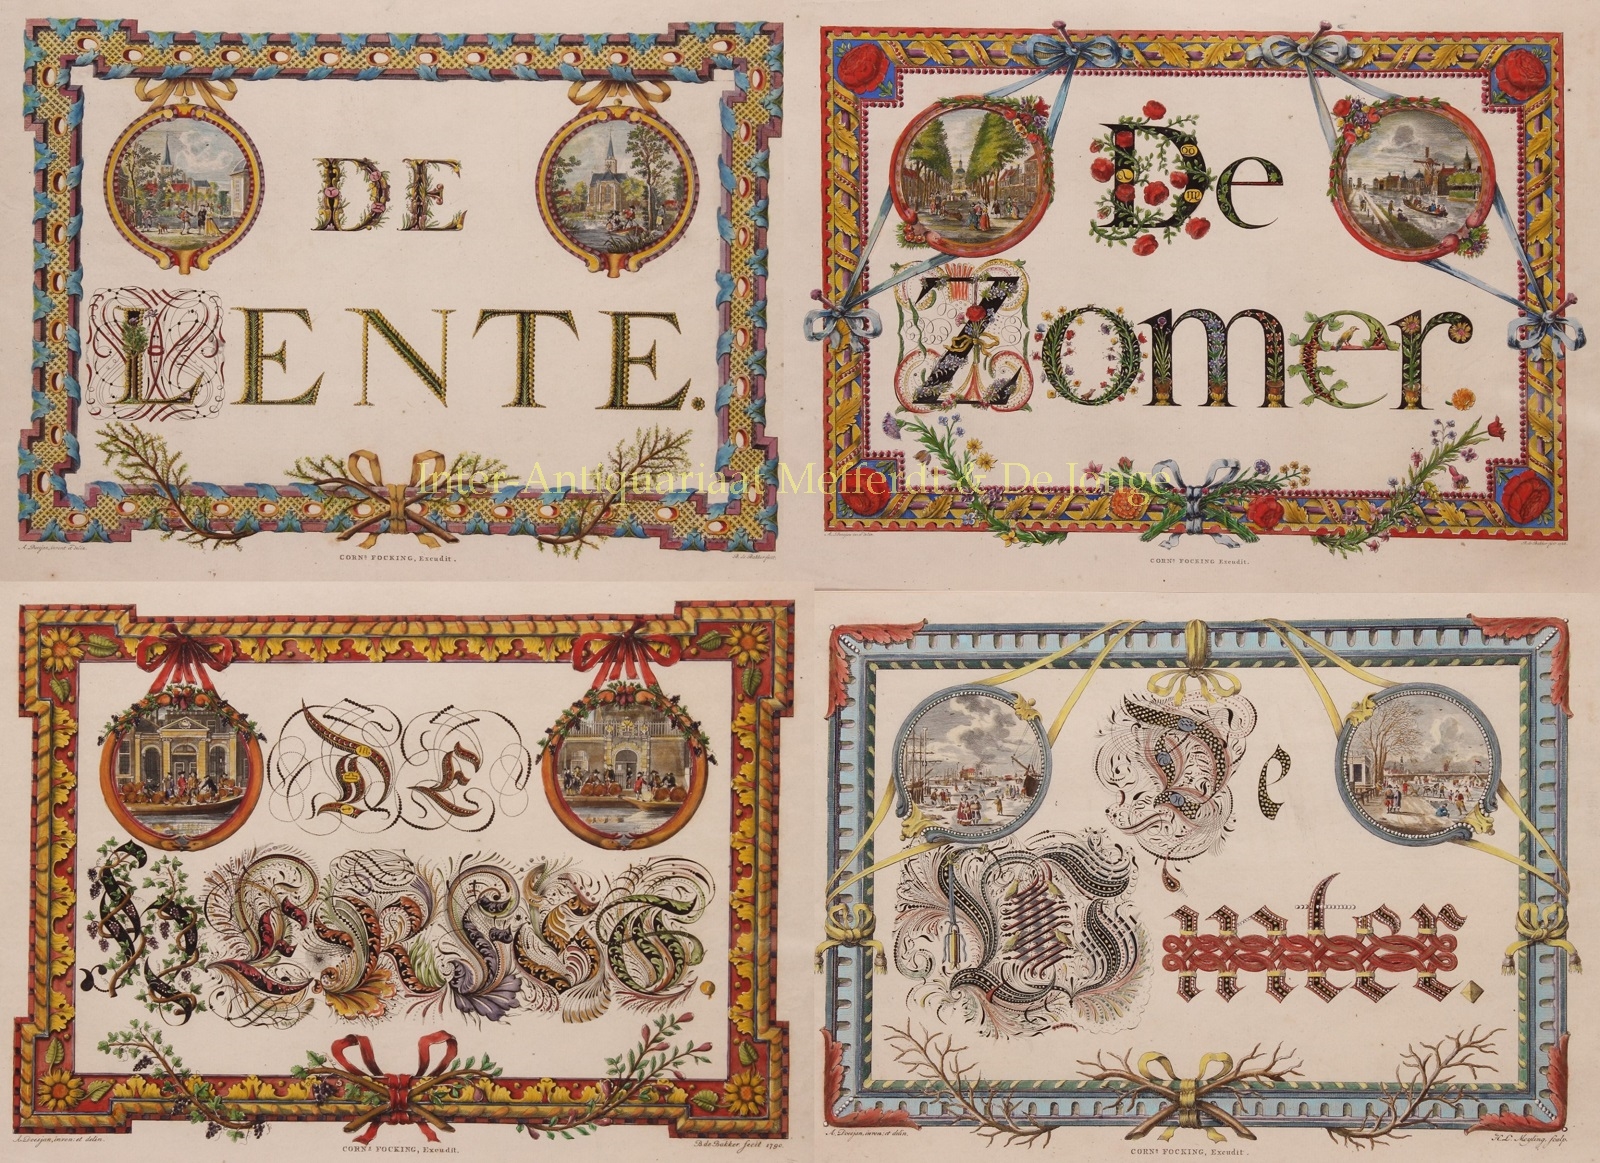 Mijling-- H.L. - Four Seasons in Amsterdam - after Adrianus Doesjan, 1790